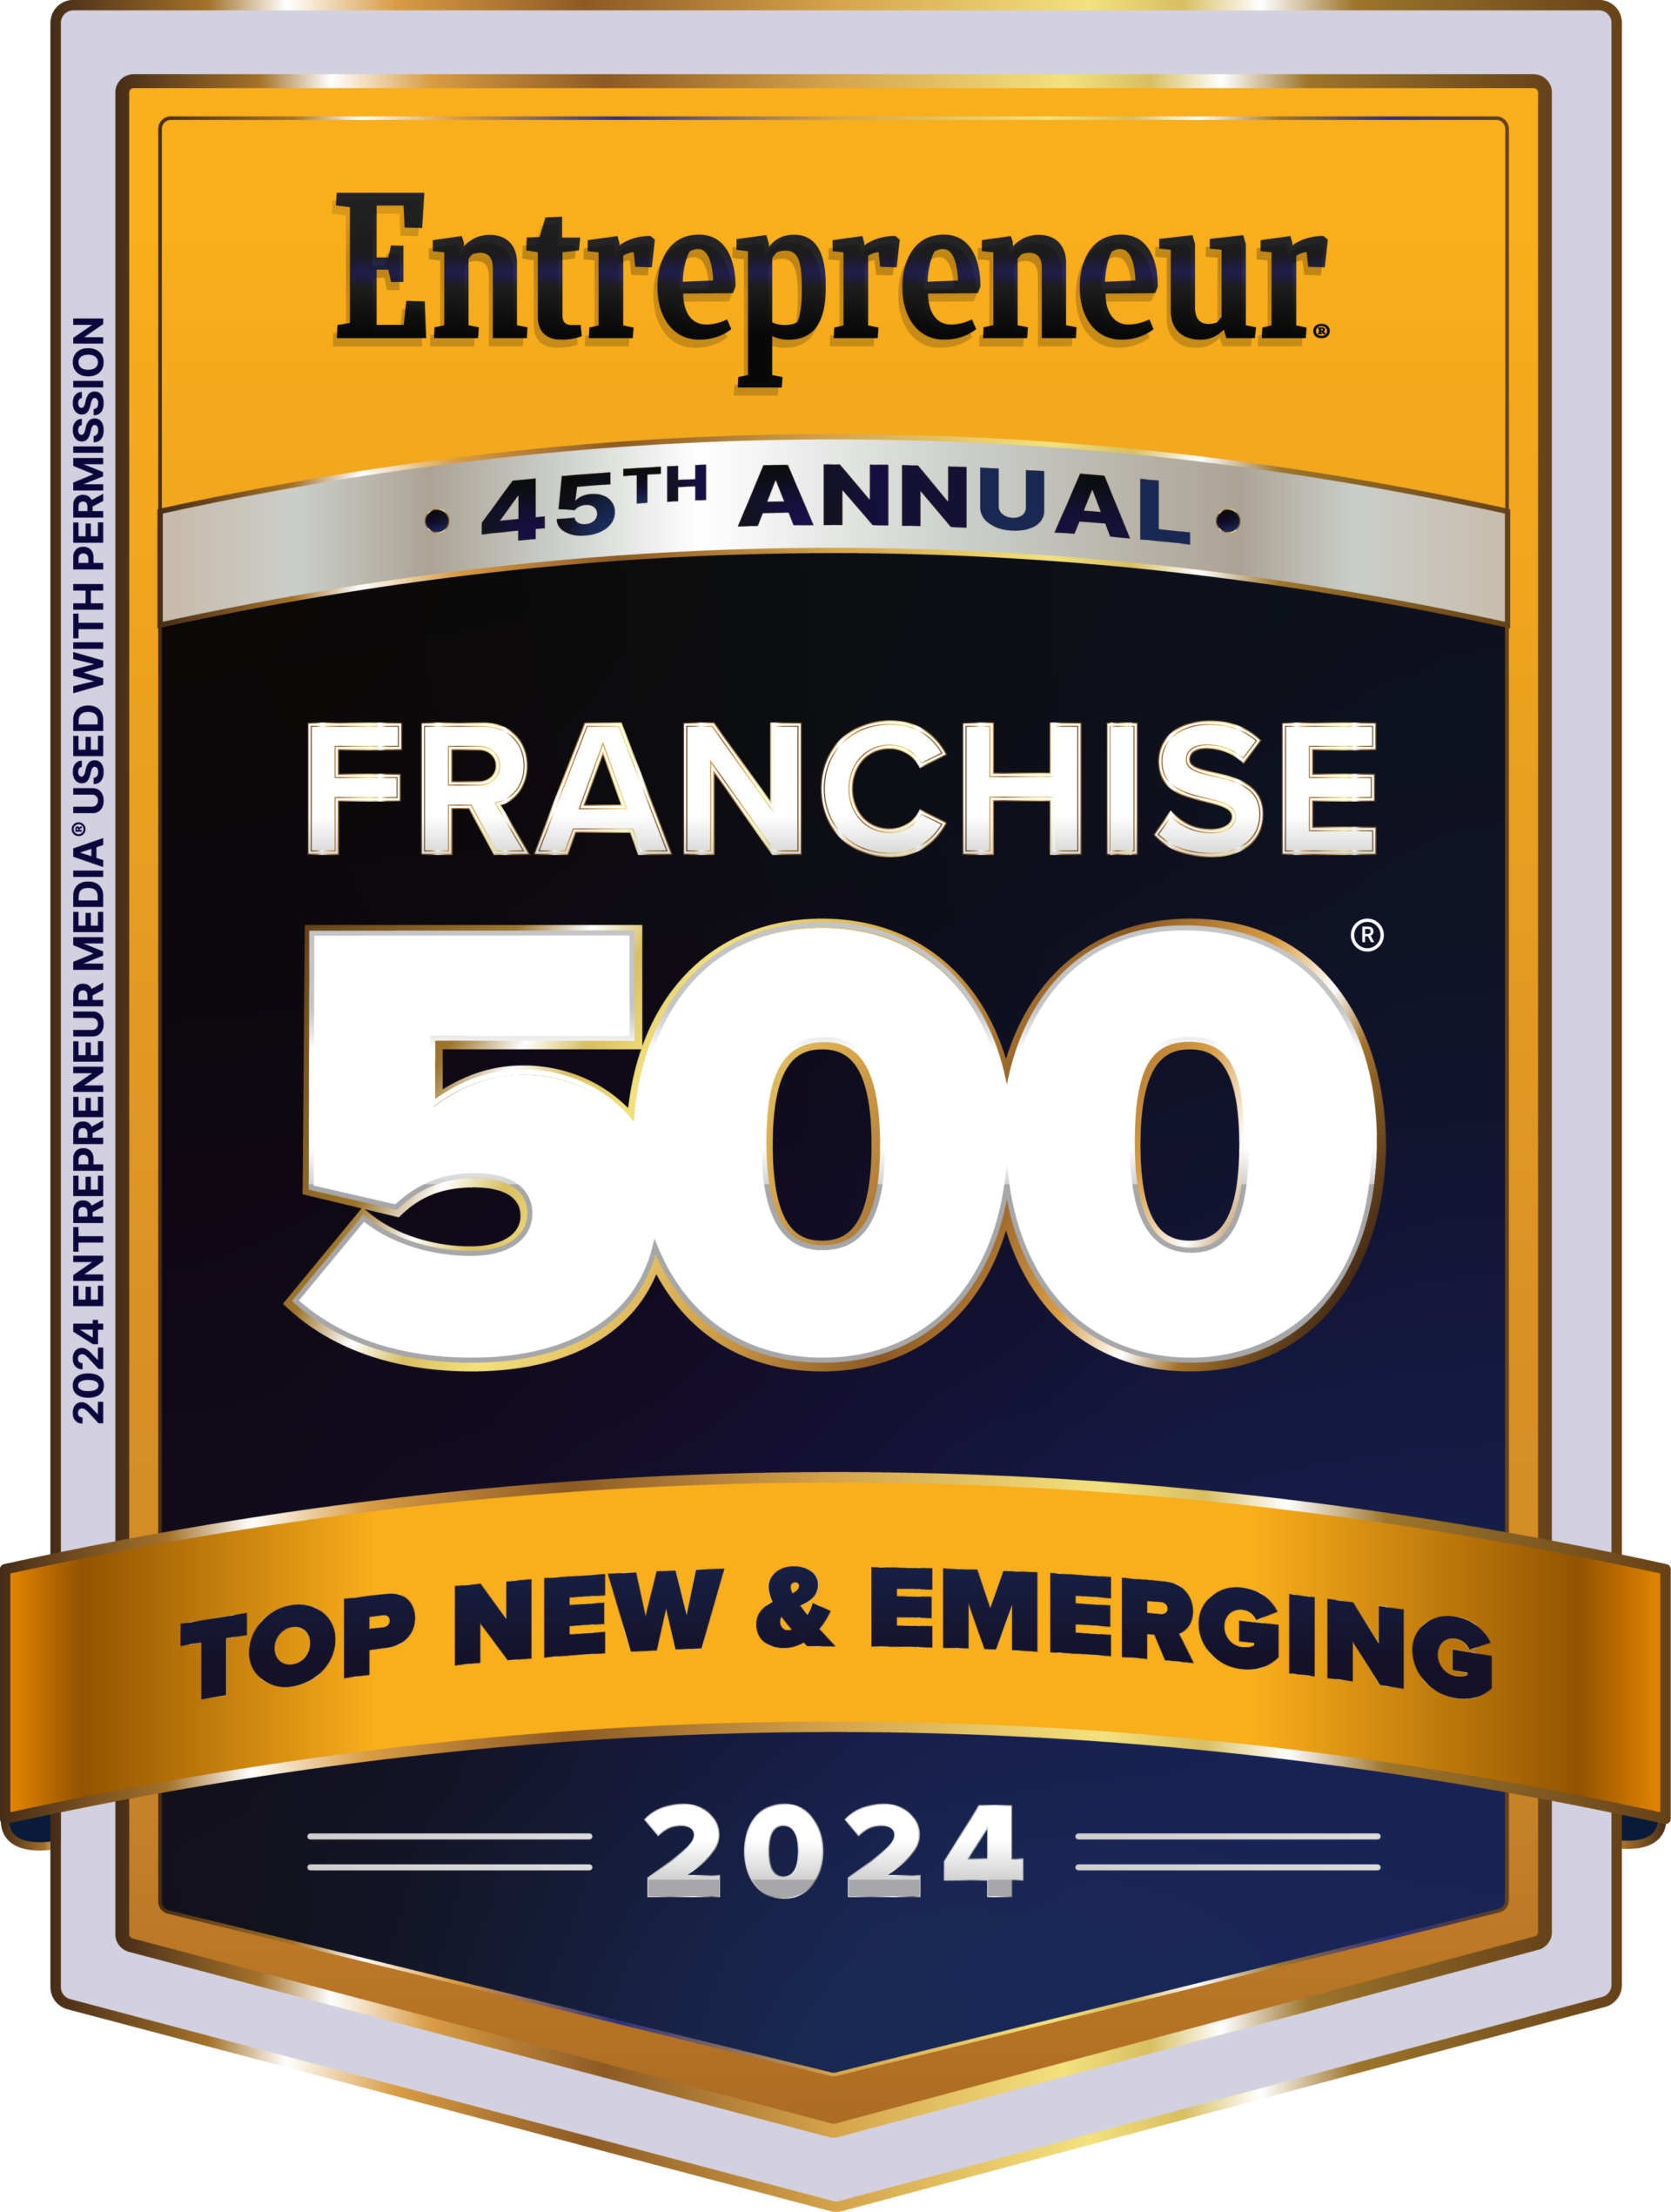 Entrepreneur FRANCHISE 500 2024 TOP NEW & EMERGING FRANCHISE